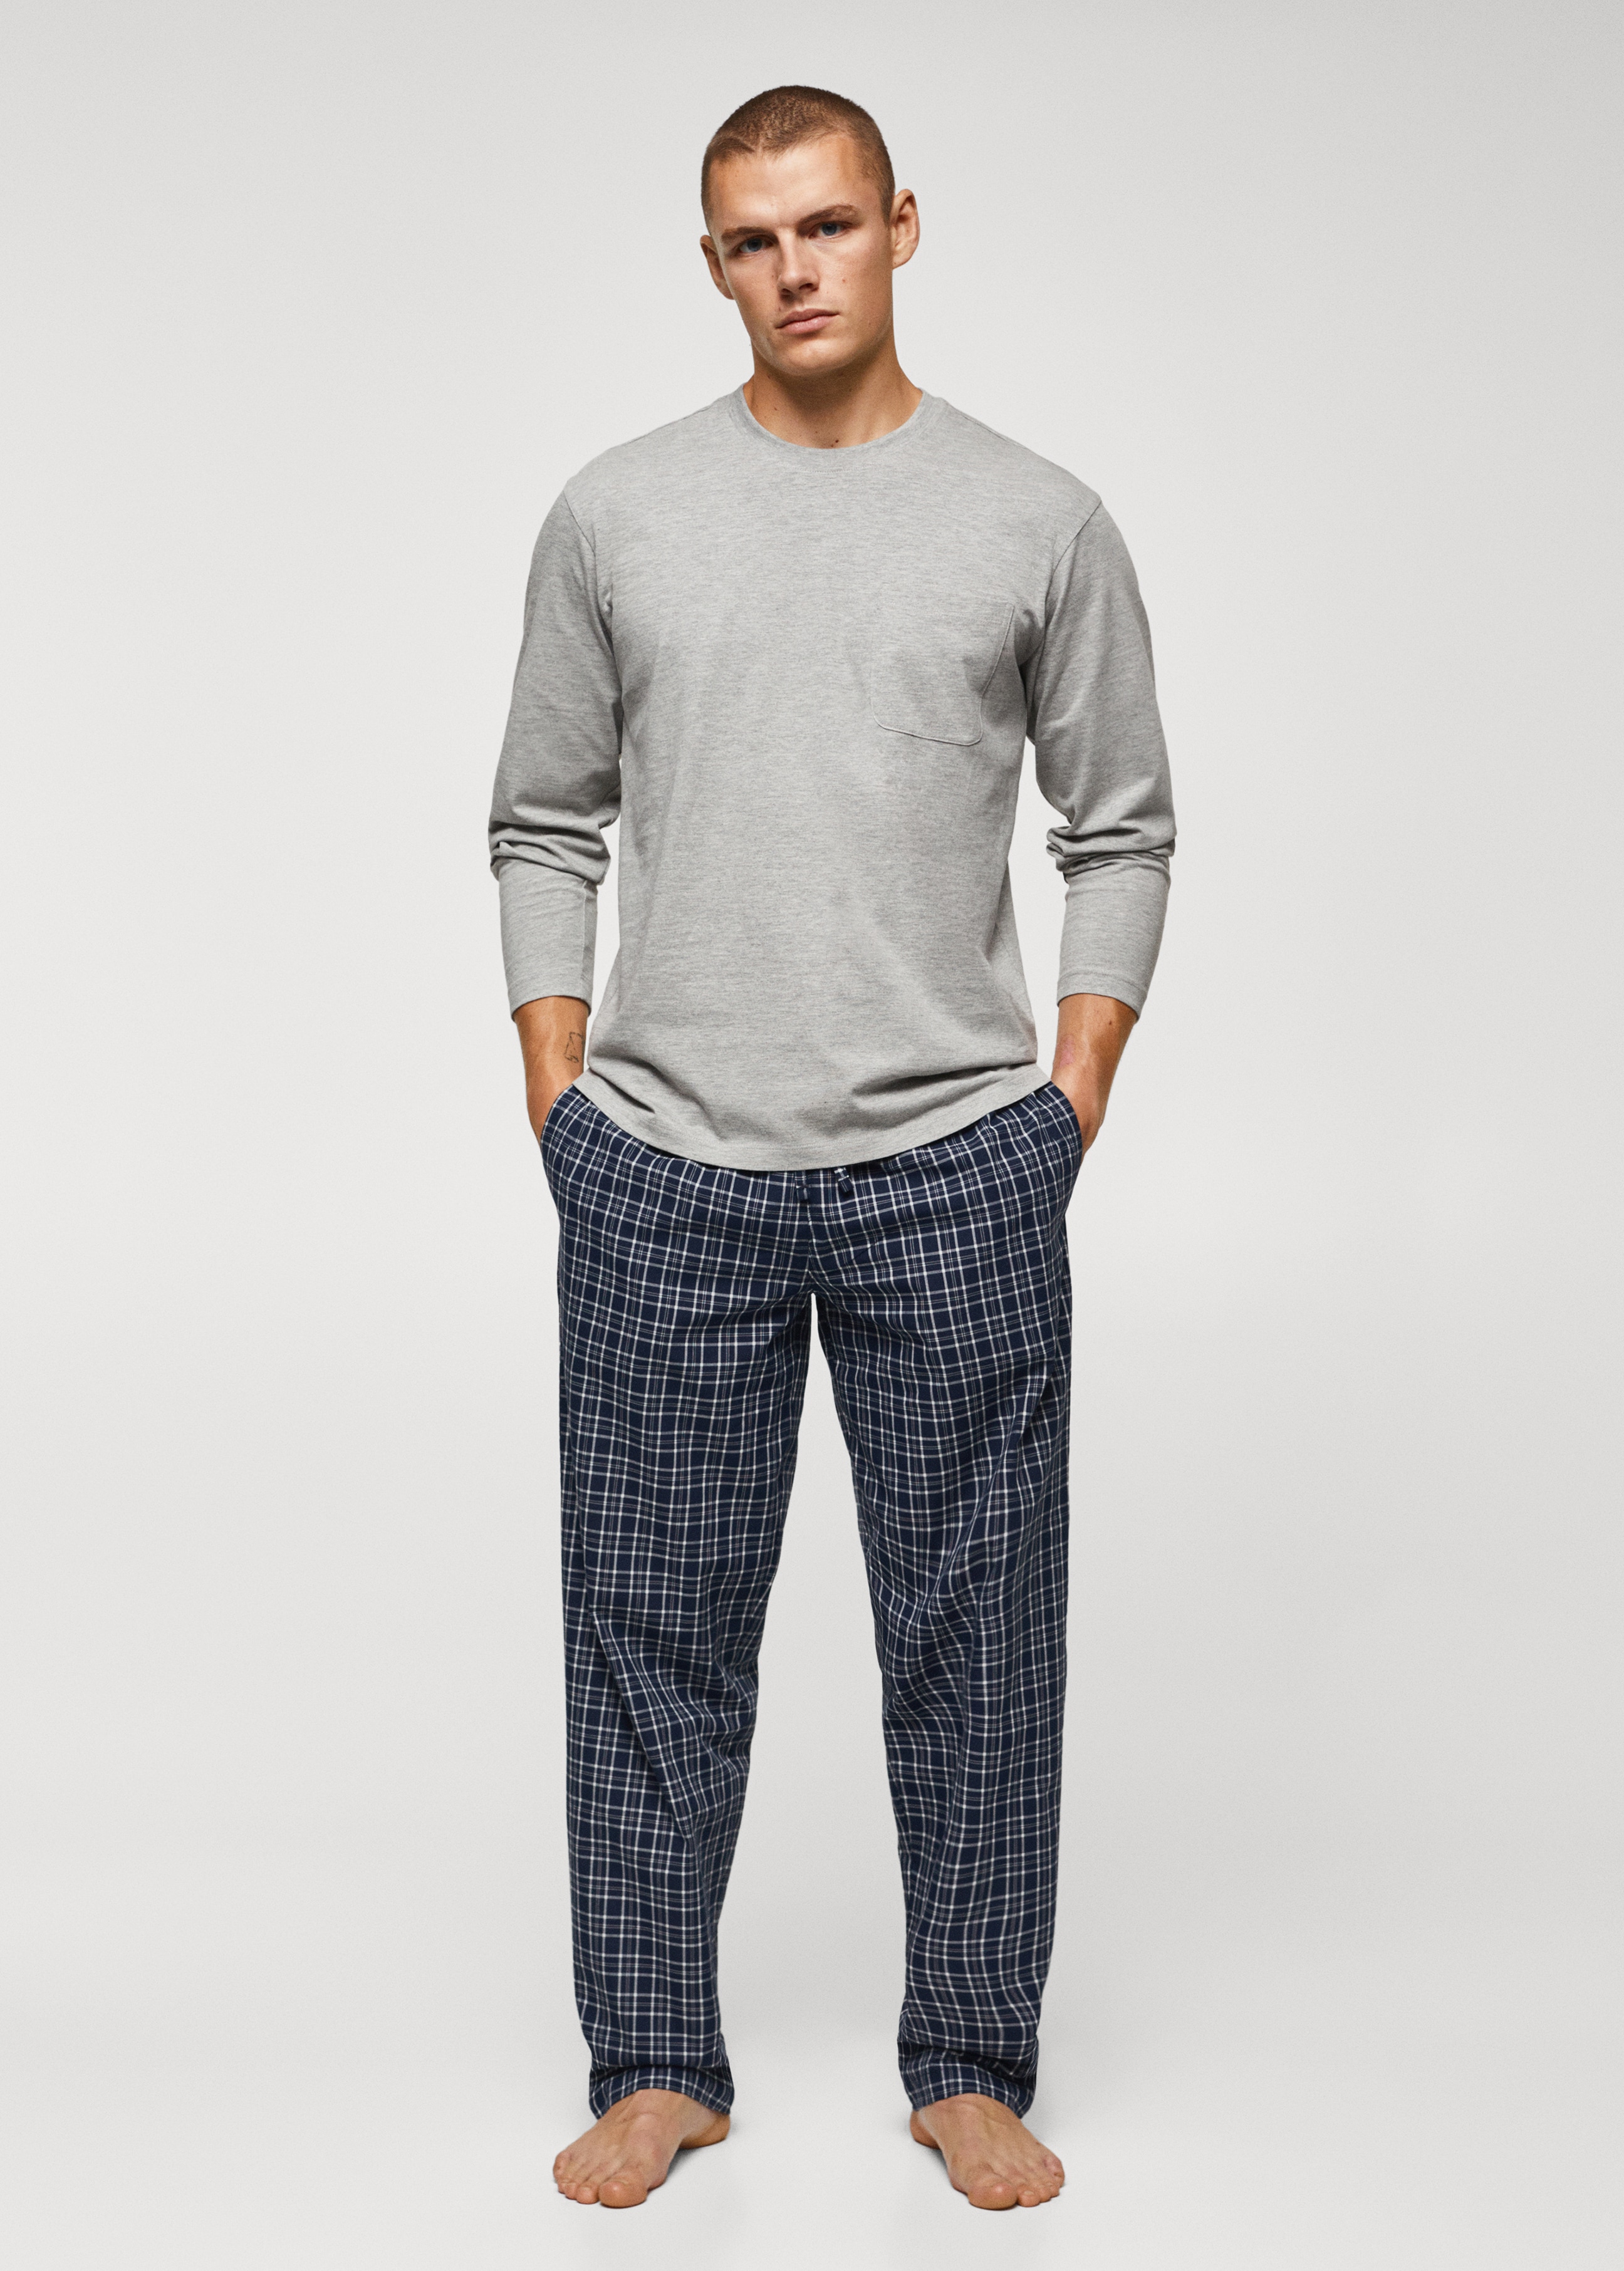 Pack pijama algodón estampado - Plano general